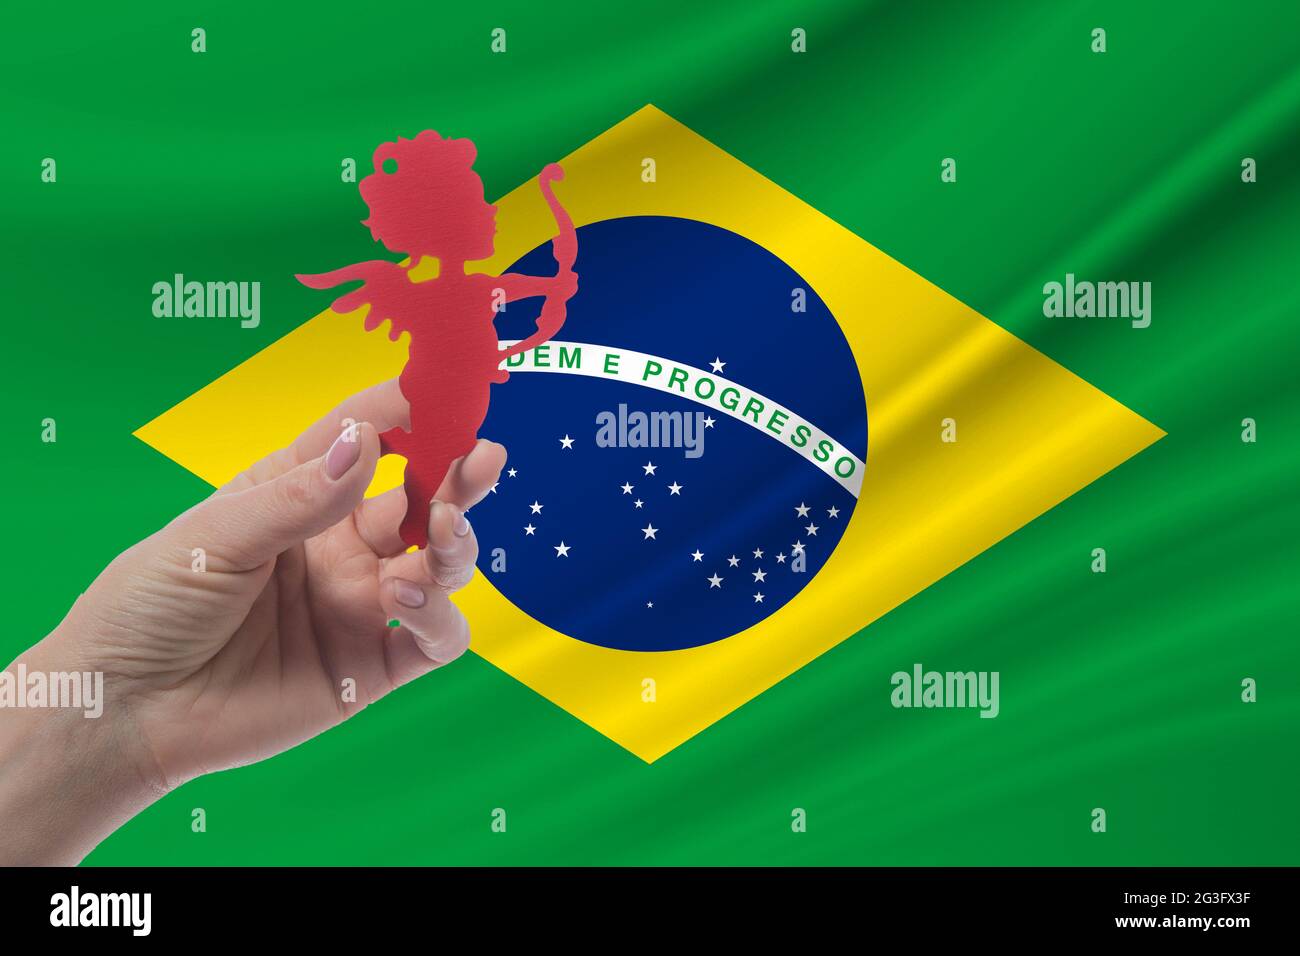 https://c8.alamy.com/comp/2G3FX3F/valentines-day-in-brazil-relations-in-brazil-celebrating-international-valentines-day-2G3FX3F.jpg